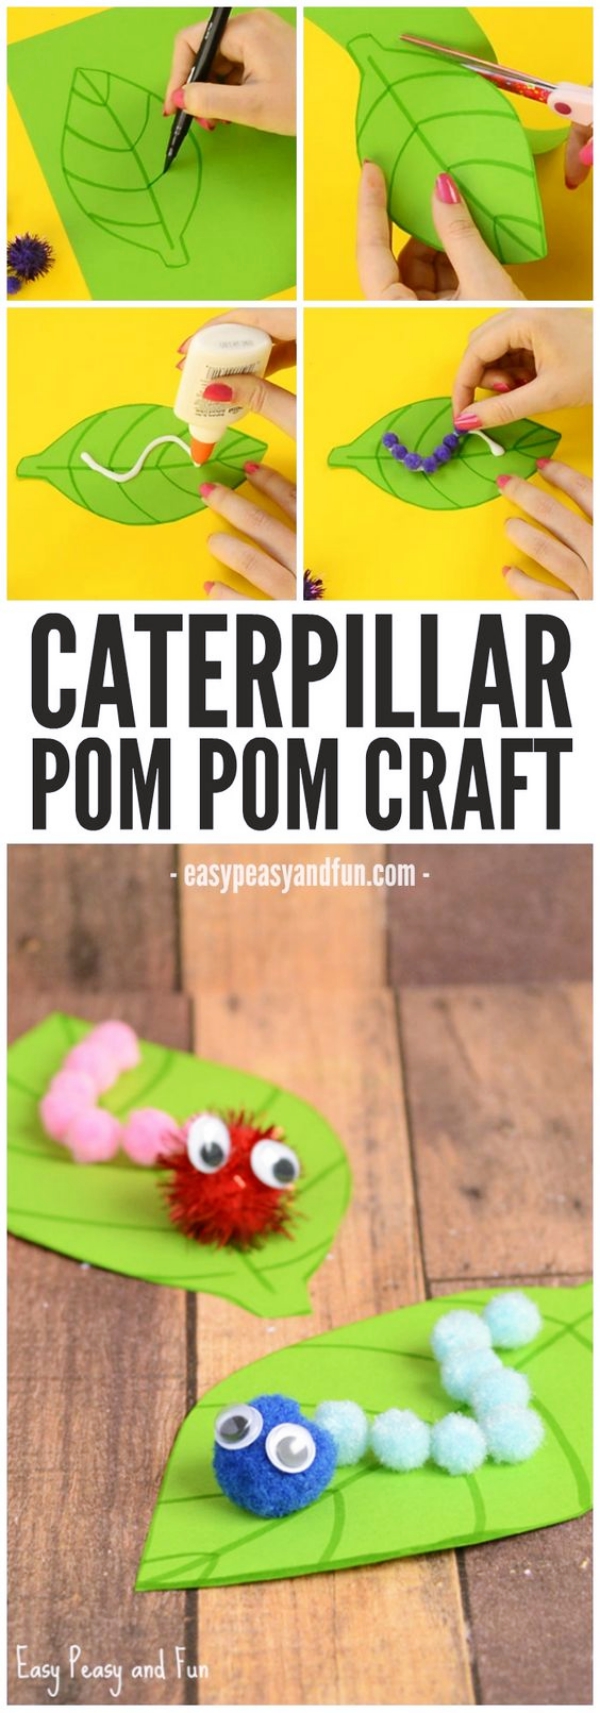 Creative-Pom-pom-Craft-Ideas